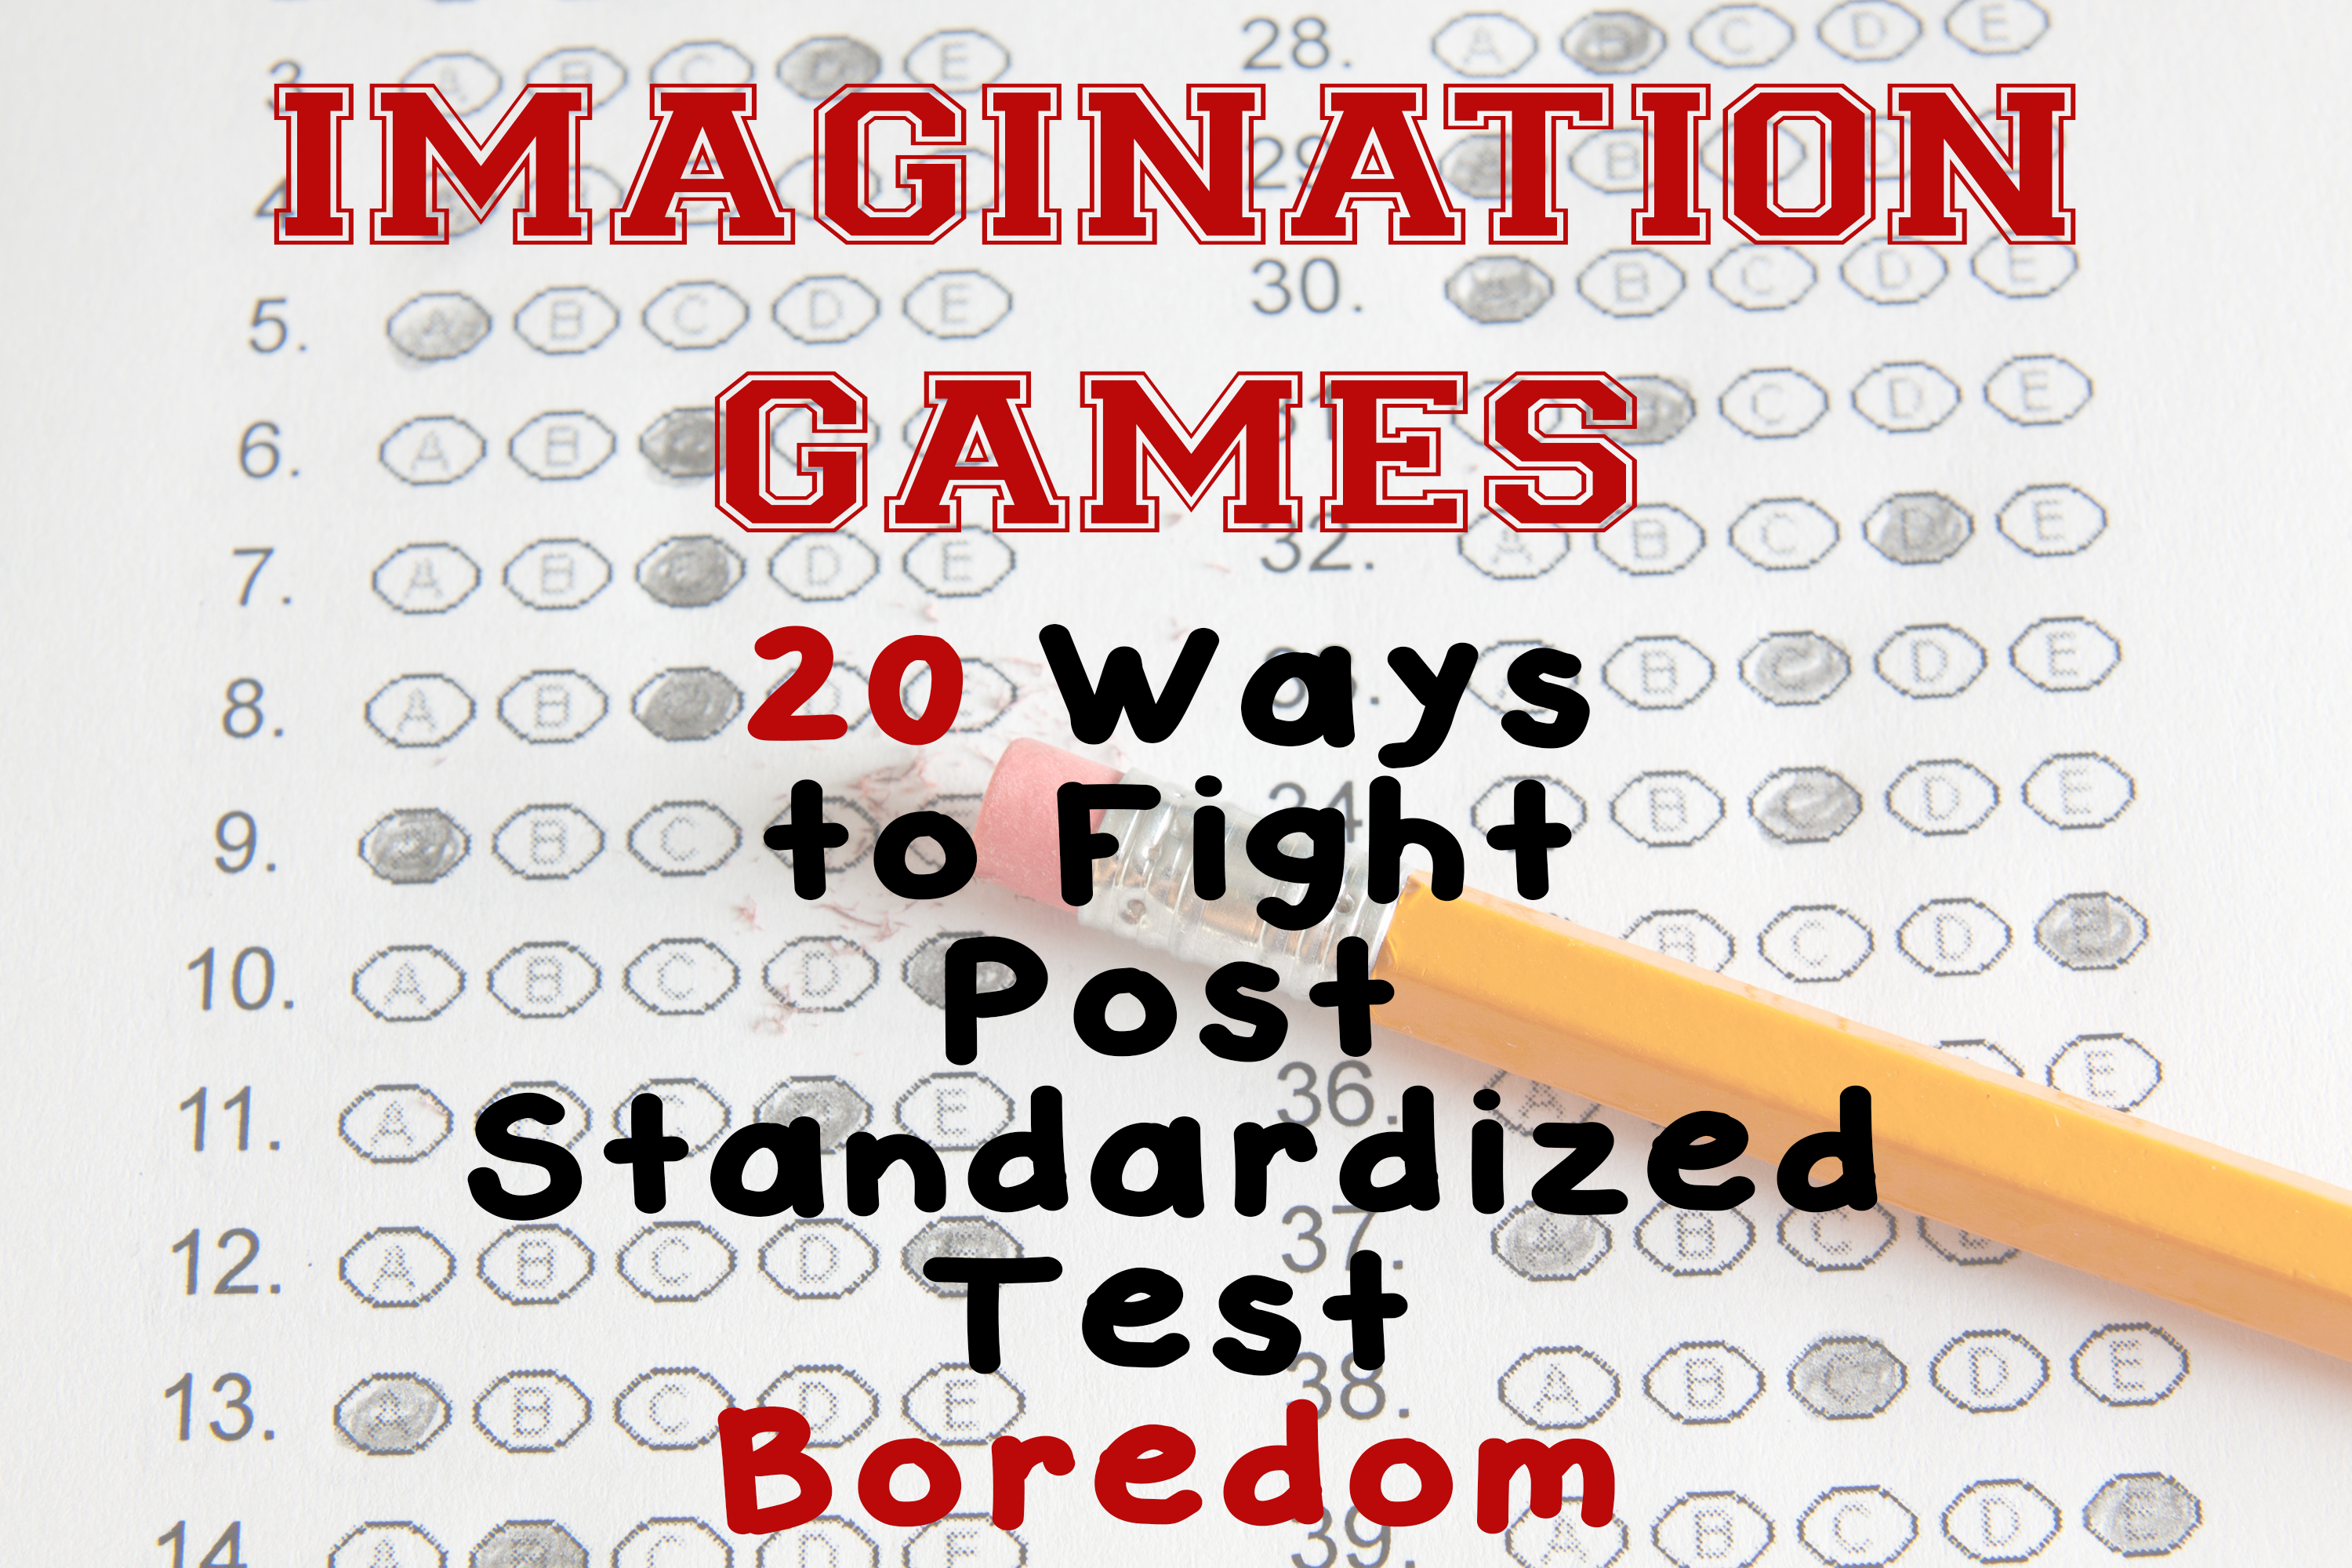 Battling Boredom, 14 Fun Games to Play When Bored